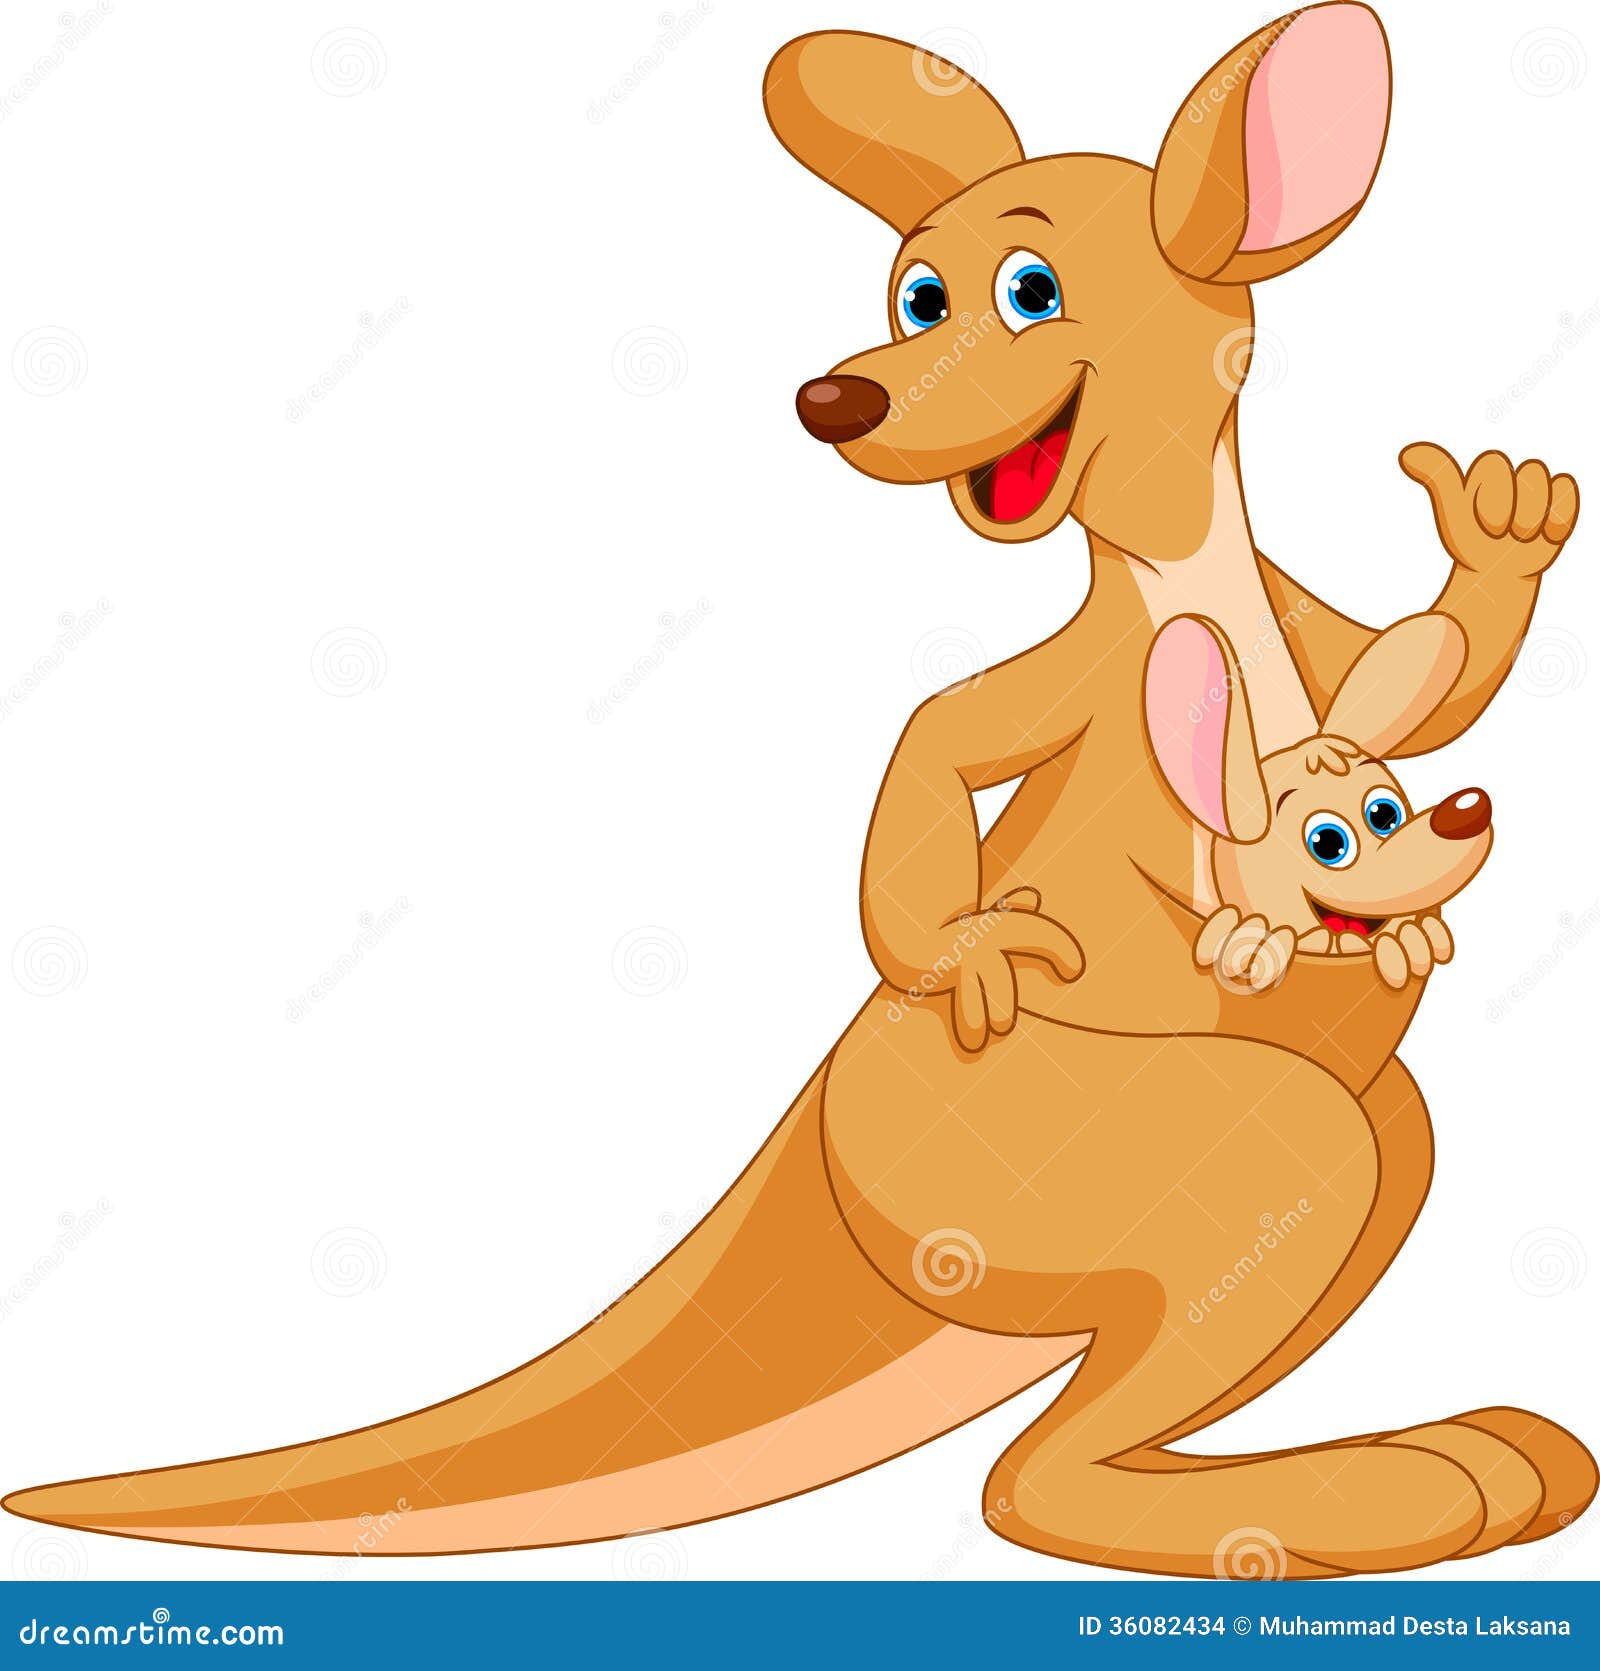 kangaroo clipart free download - photo #48